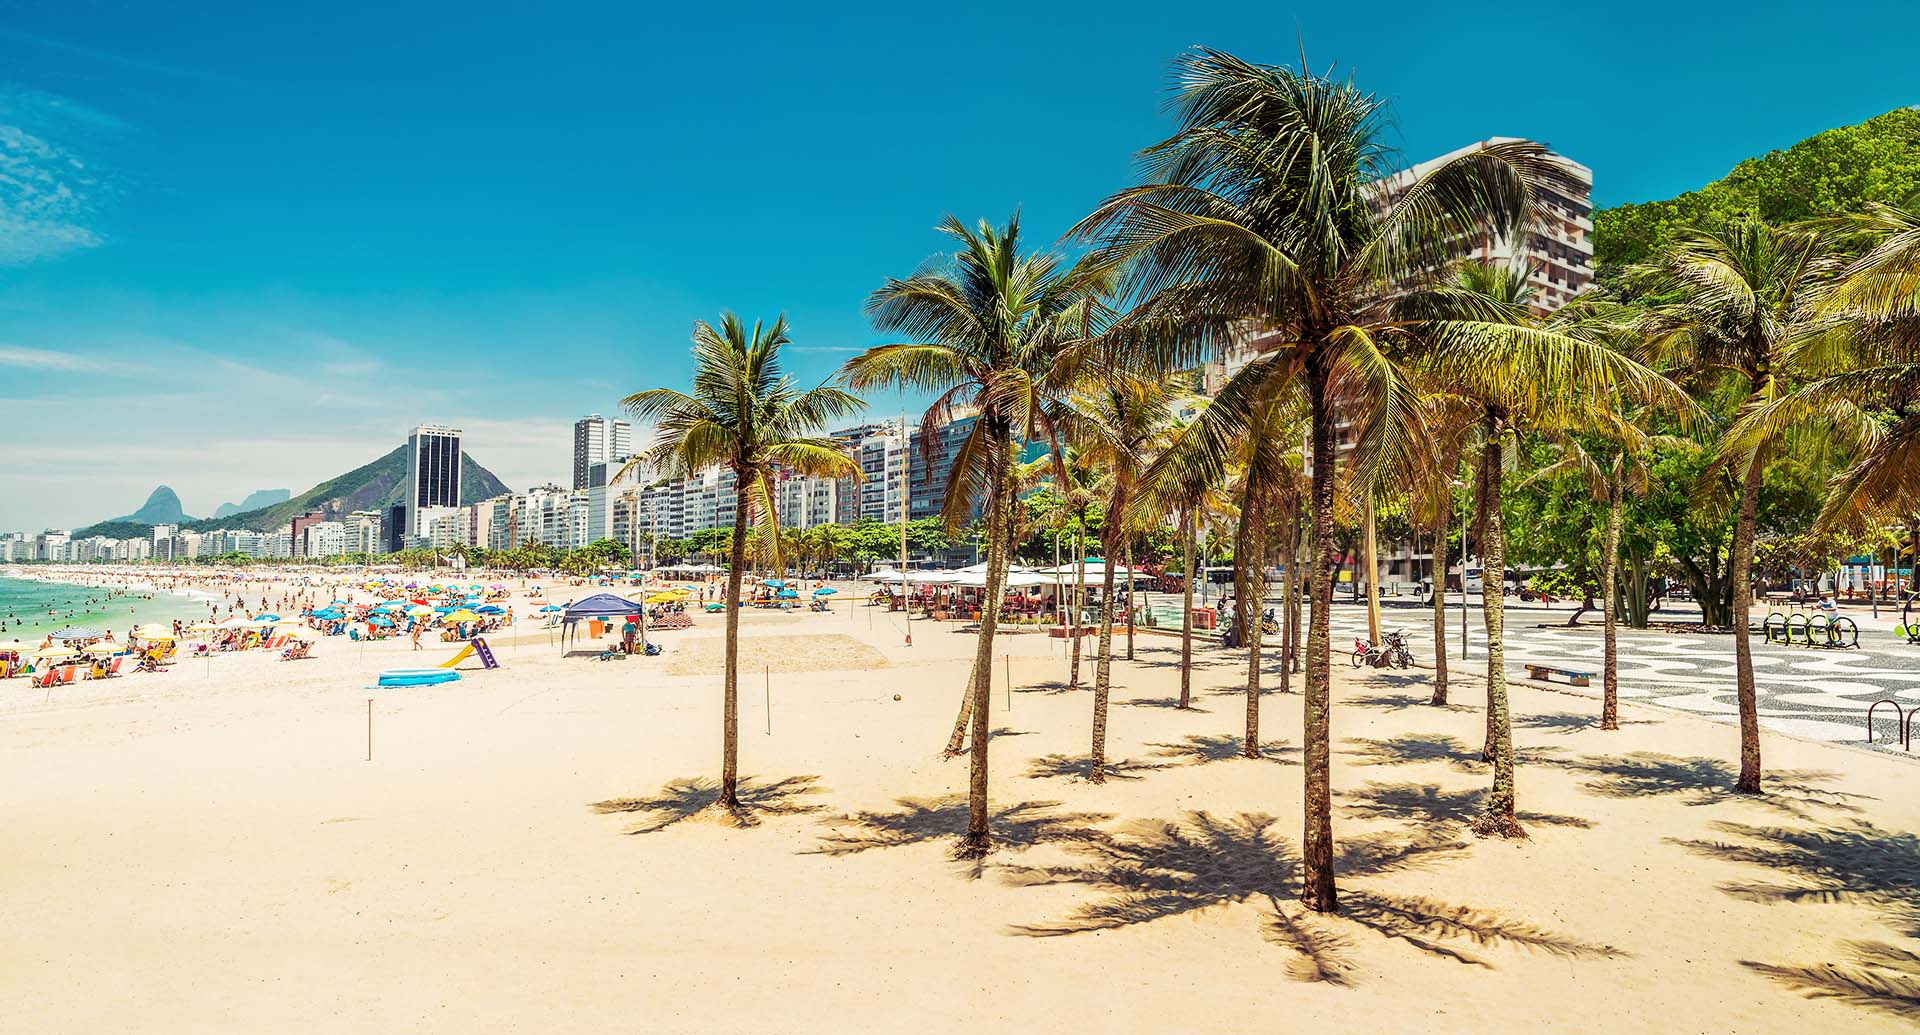 Copacabana - Before